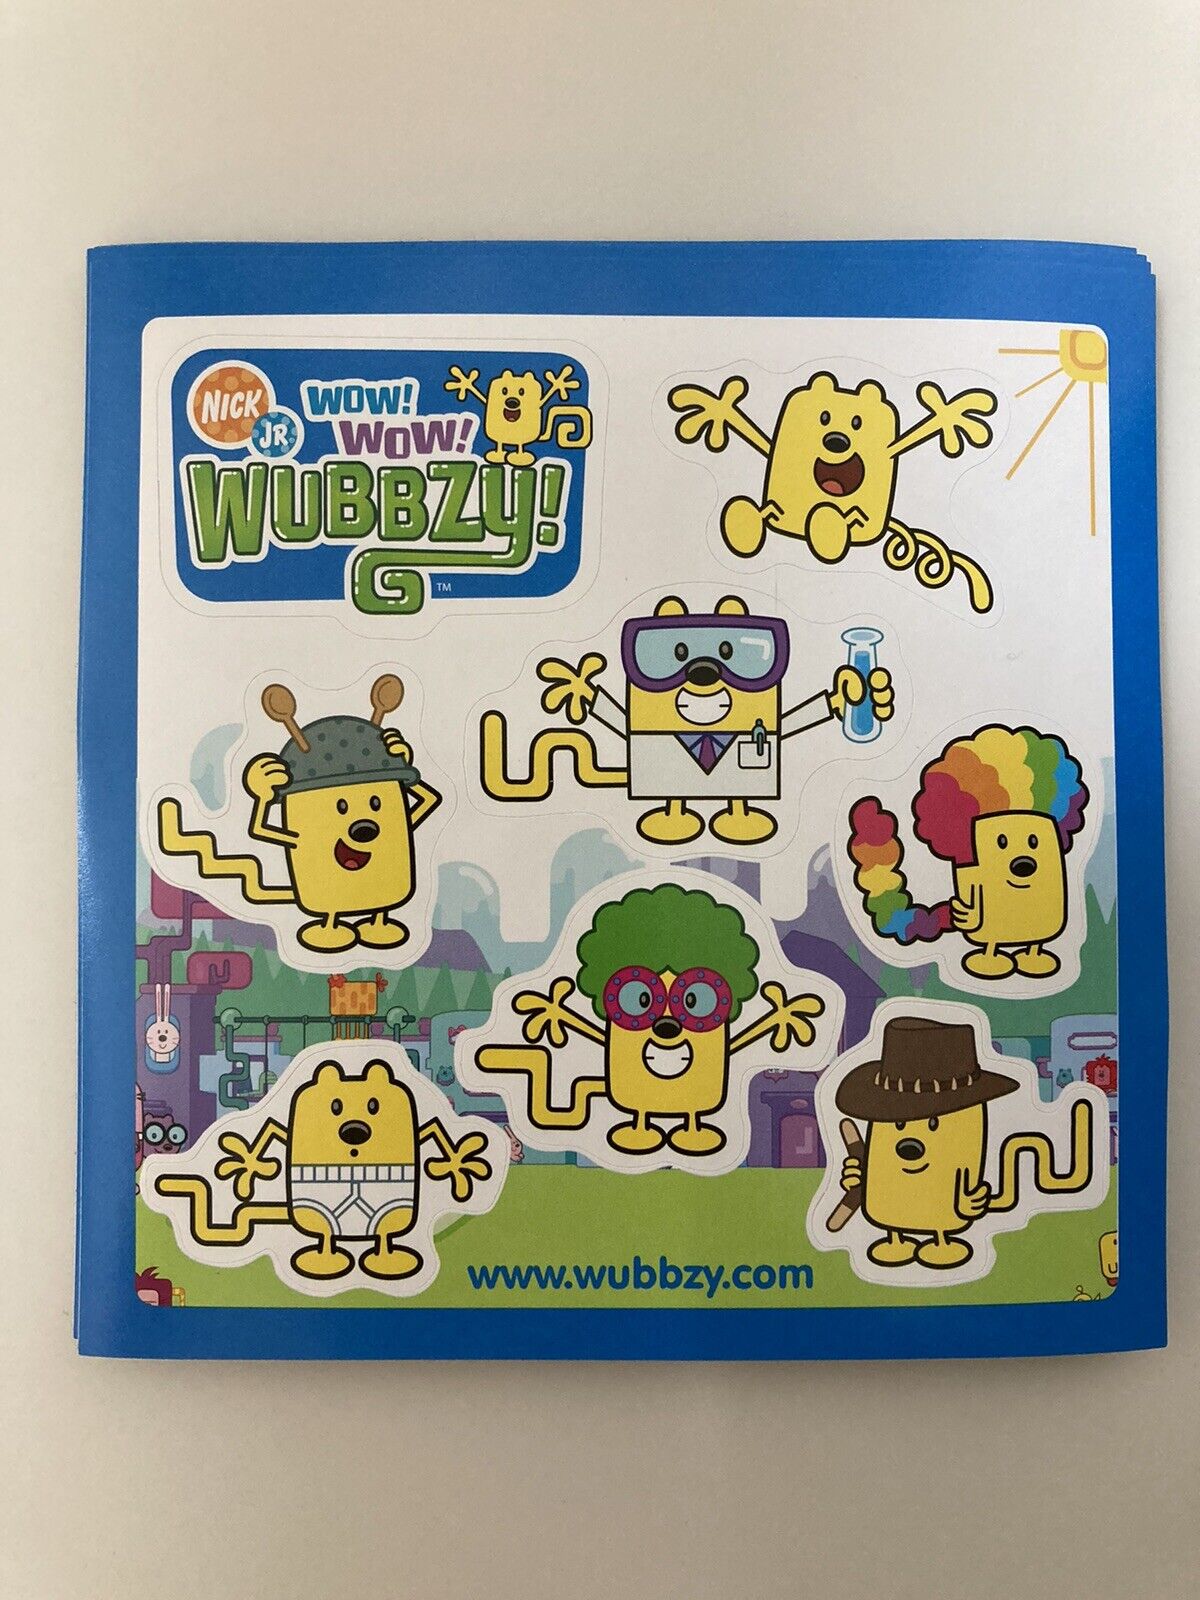 Wow! Wow! Wubbzy! Sticker Sheet Lot of 10 Nick Jr 2008 DVD Release Promo  Ten  Bolder Media Inc. Wubbzy - фотография #2